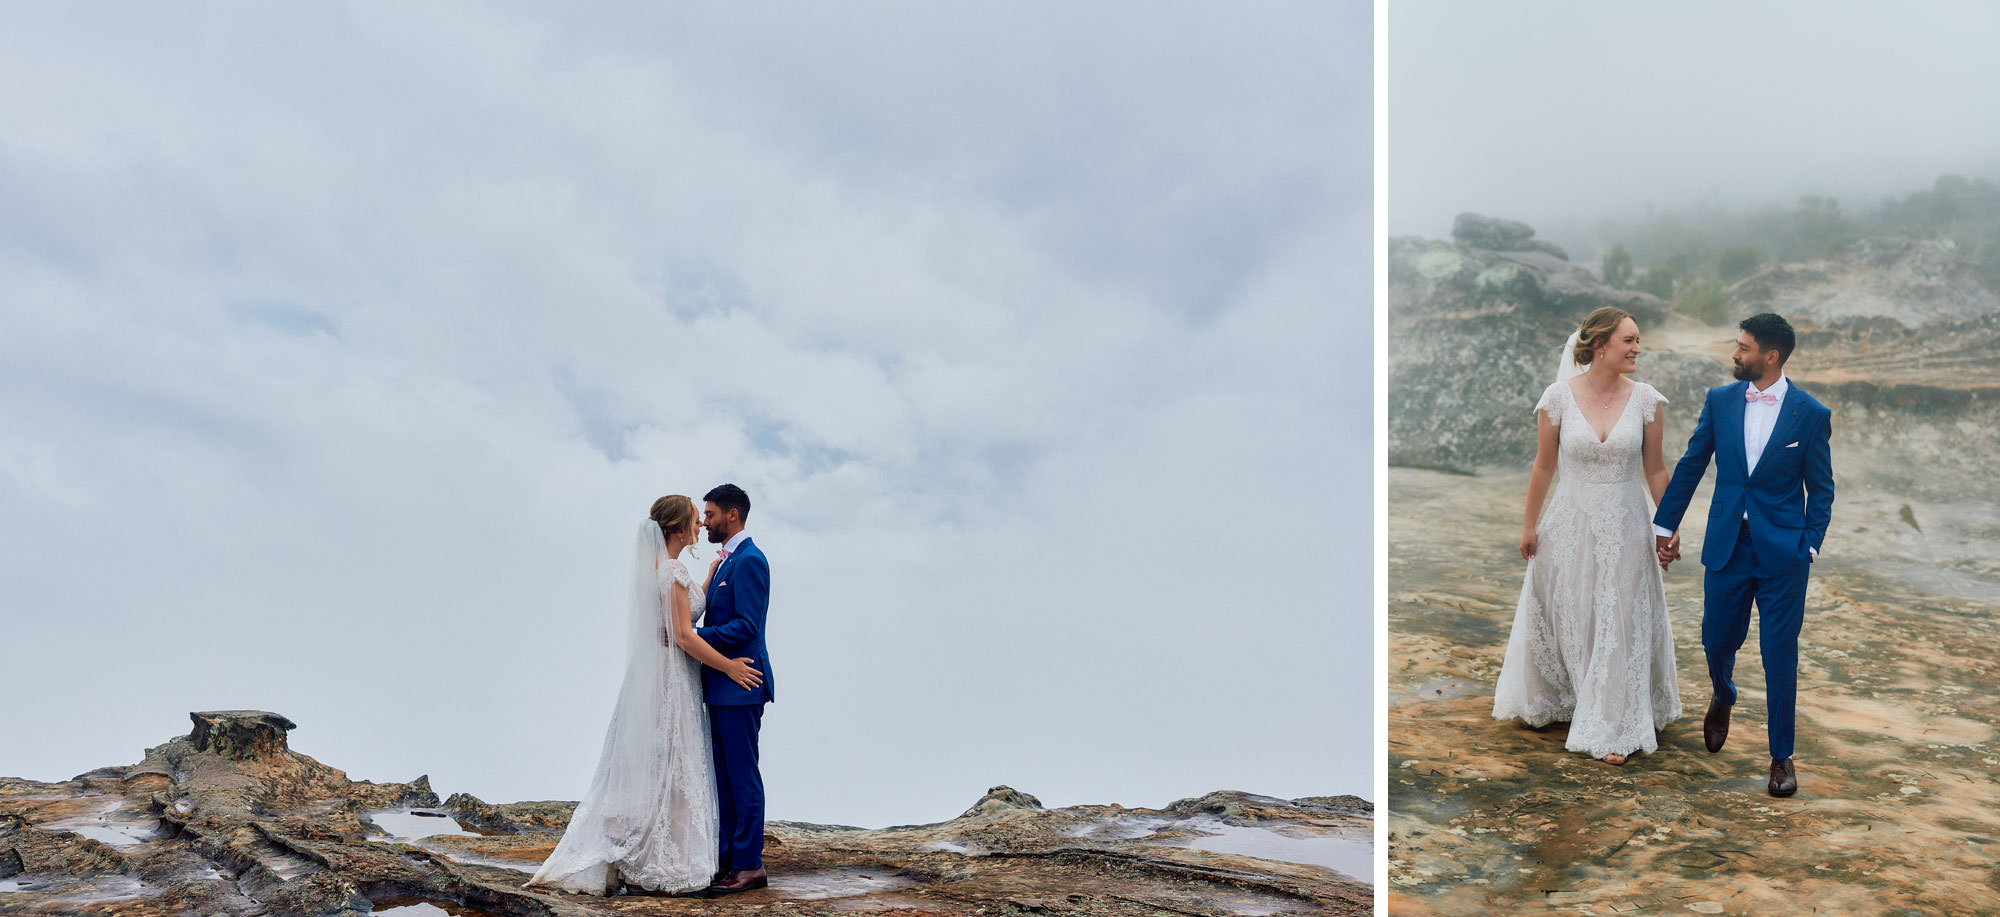 Misty Blue Mountains wedding photos